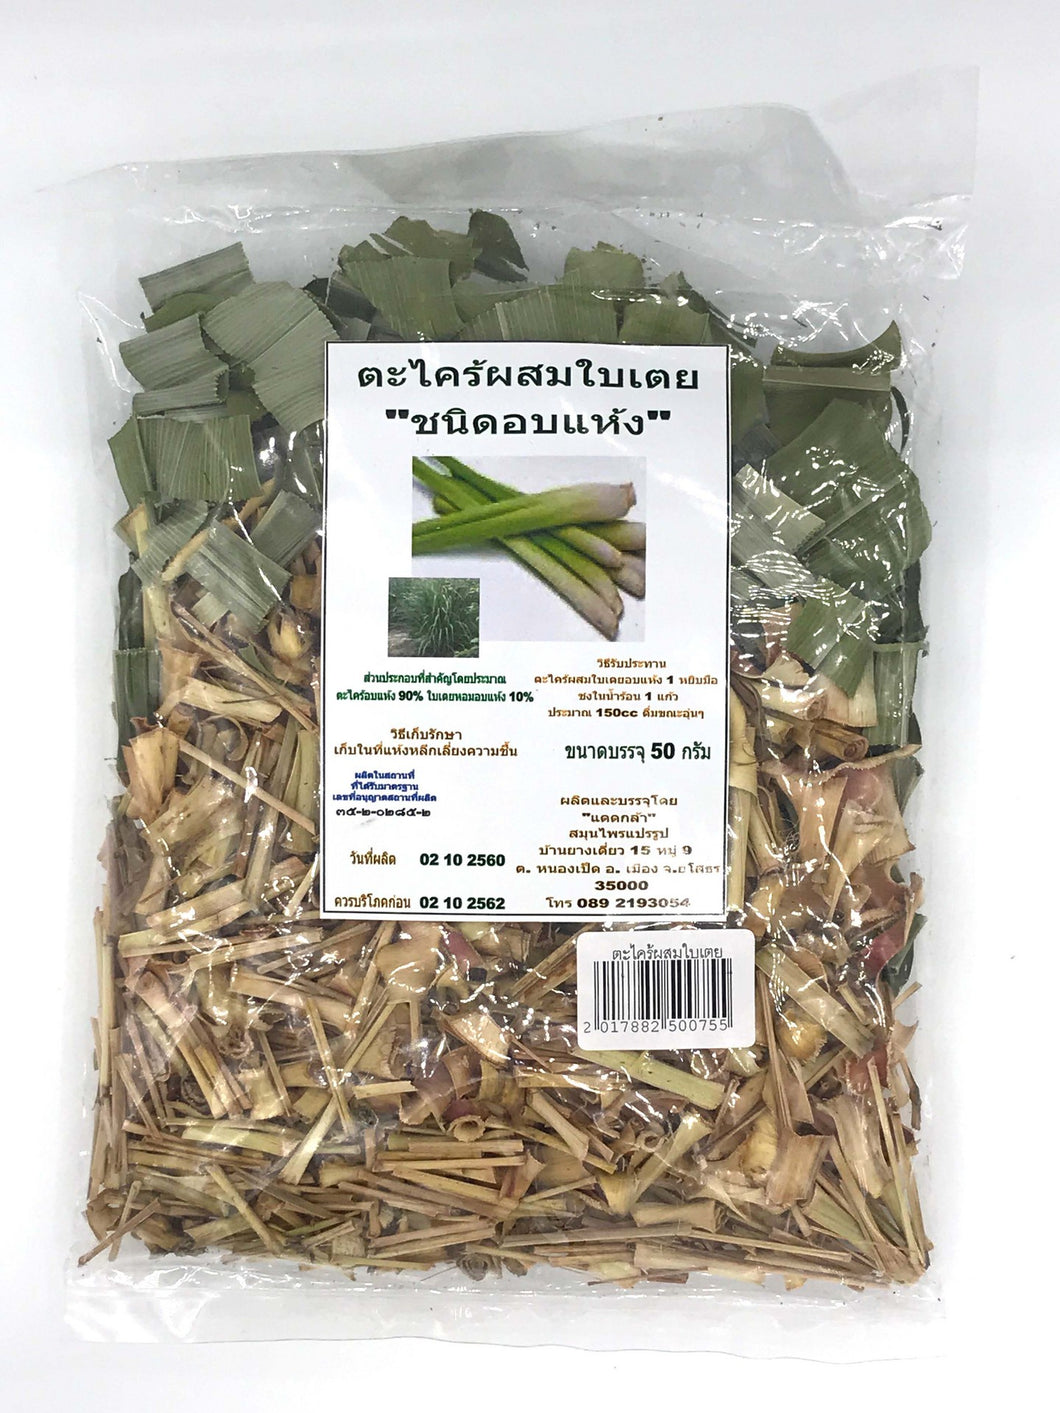 Mae Sangat - Dried Herbal Pandan and Lemongrass ตะไคร้ผสมใบเตย อบแห้ง แม่สงัด